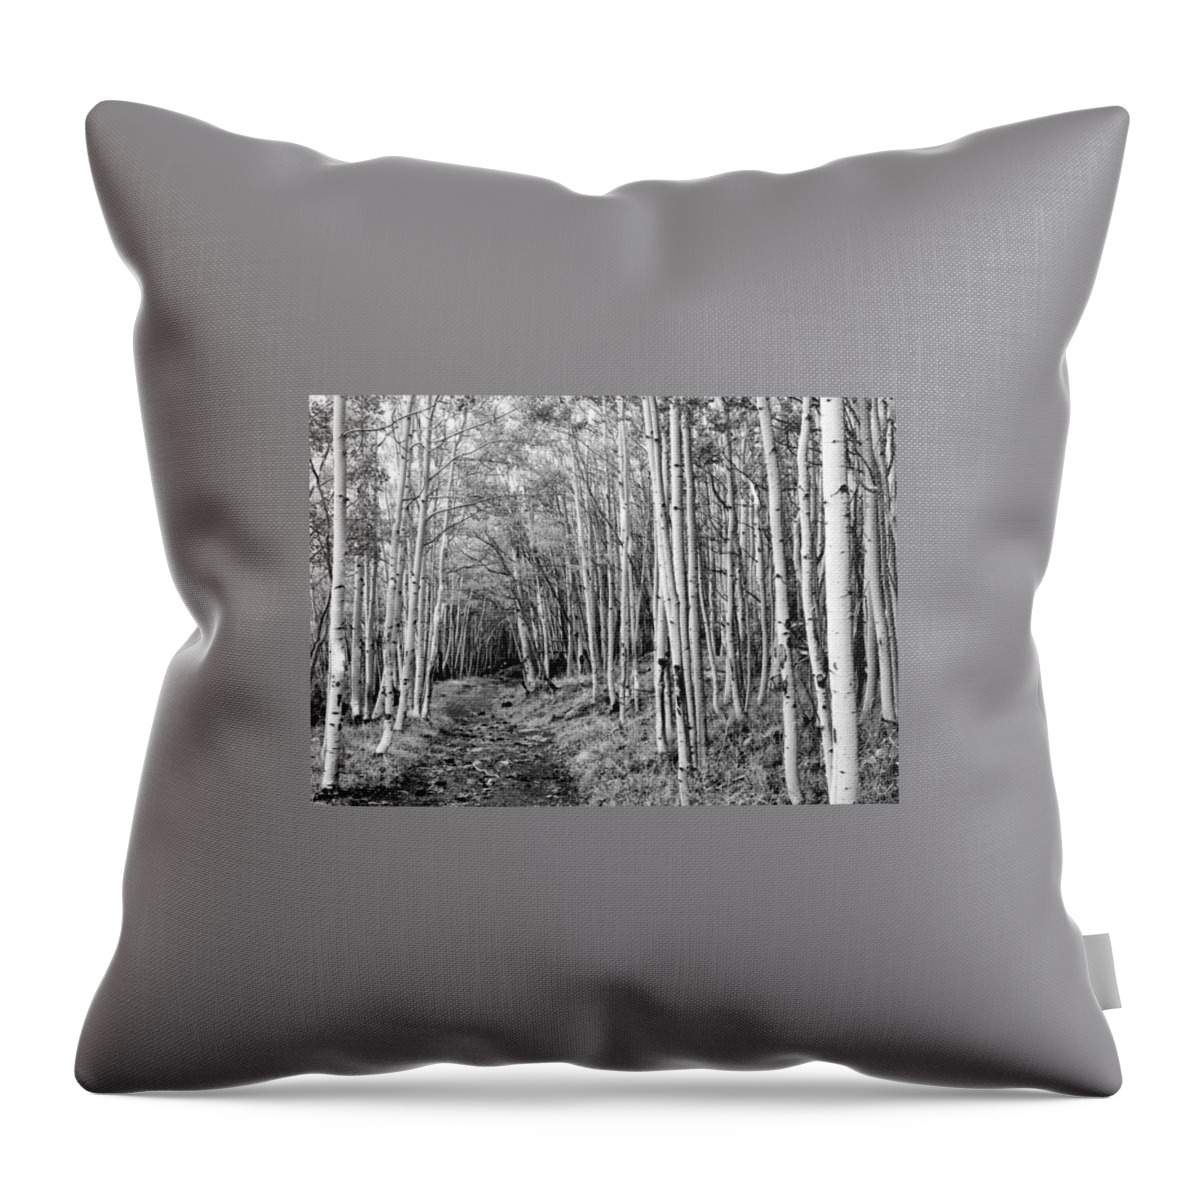 Aspen Throw Pillow featuring the photograph Aspen Forest by Farol Tomson